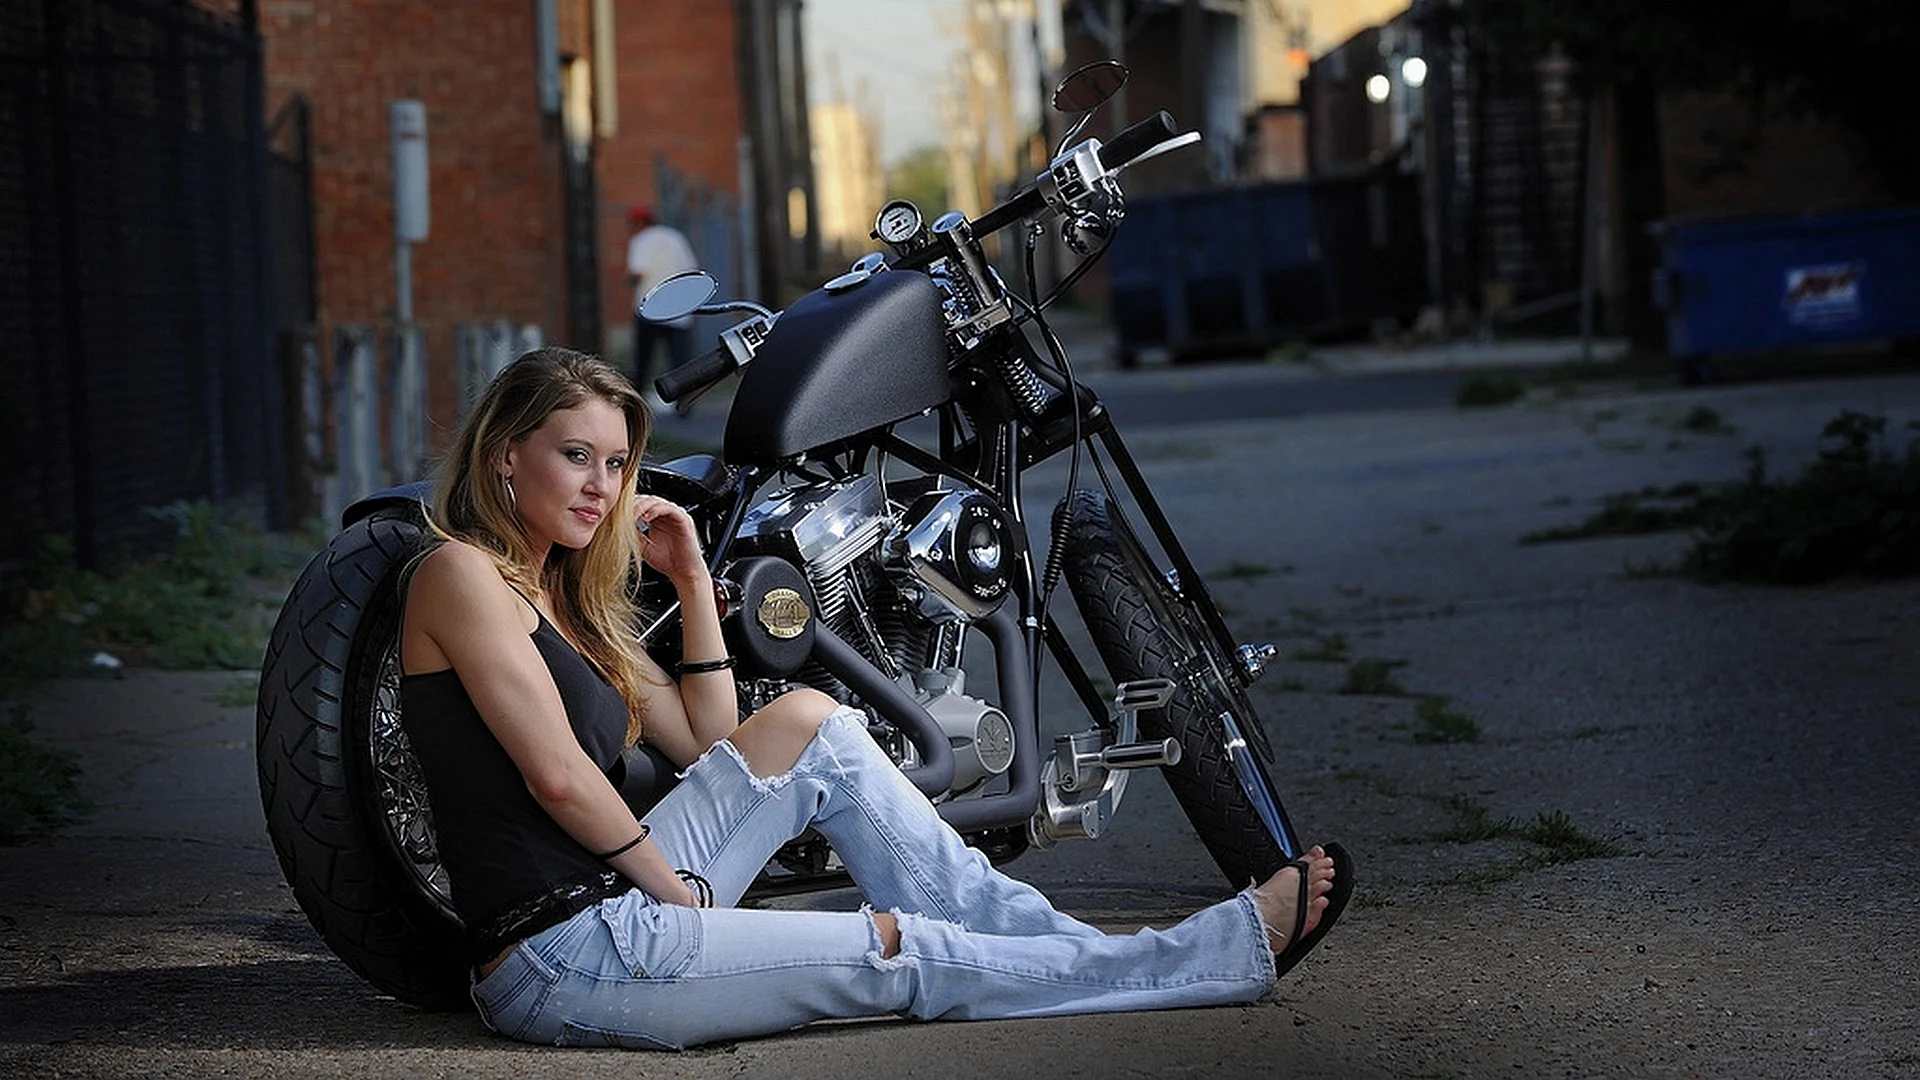 Motorcycle girl Wallpaper